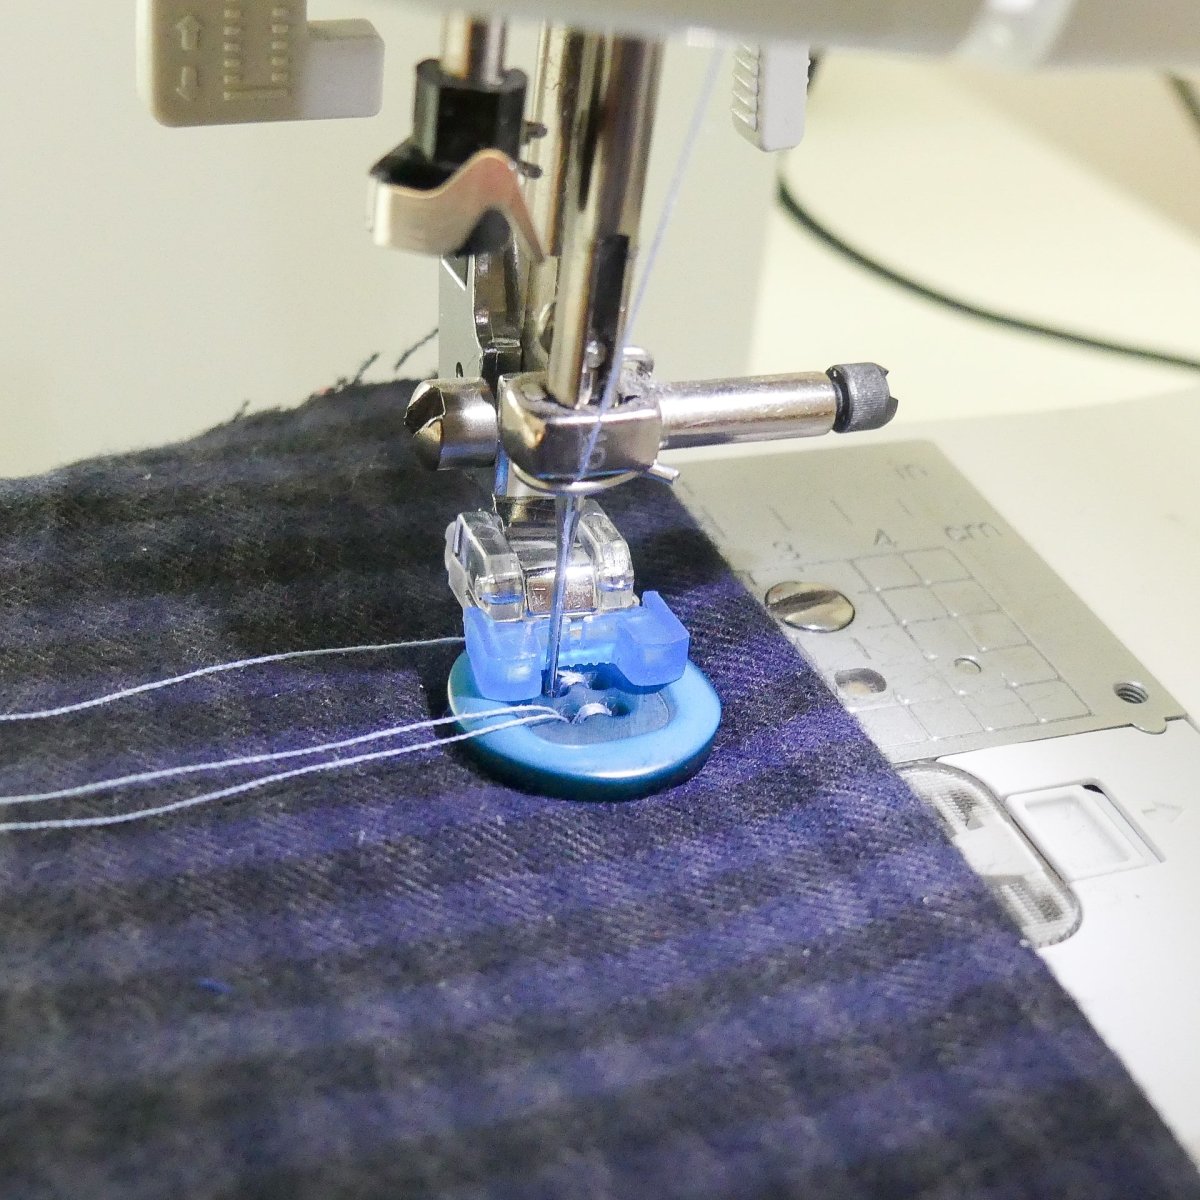 Button Sewing Machine Attachment To Sew Buttons – MadamSew